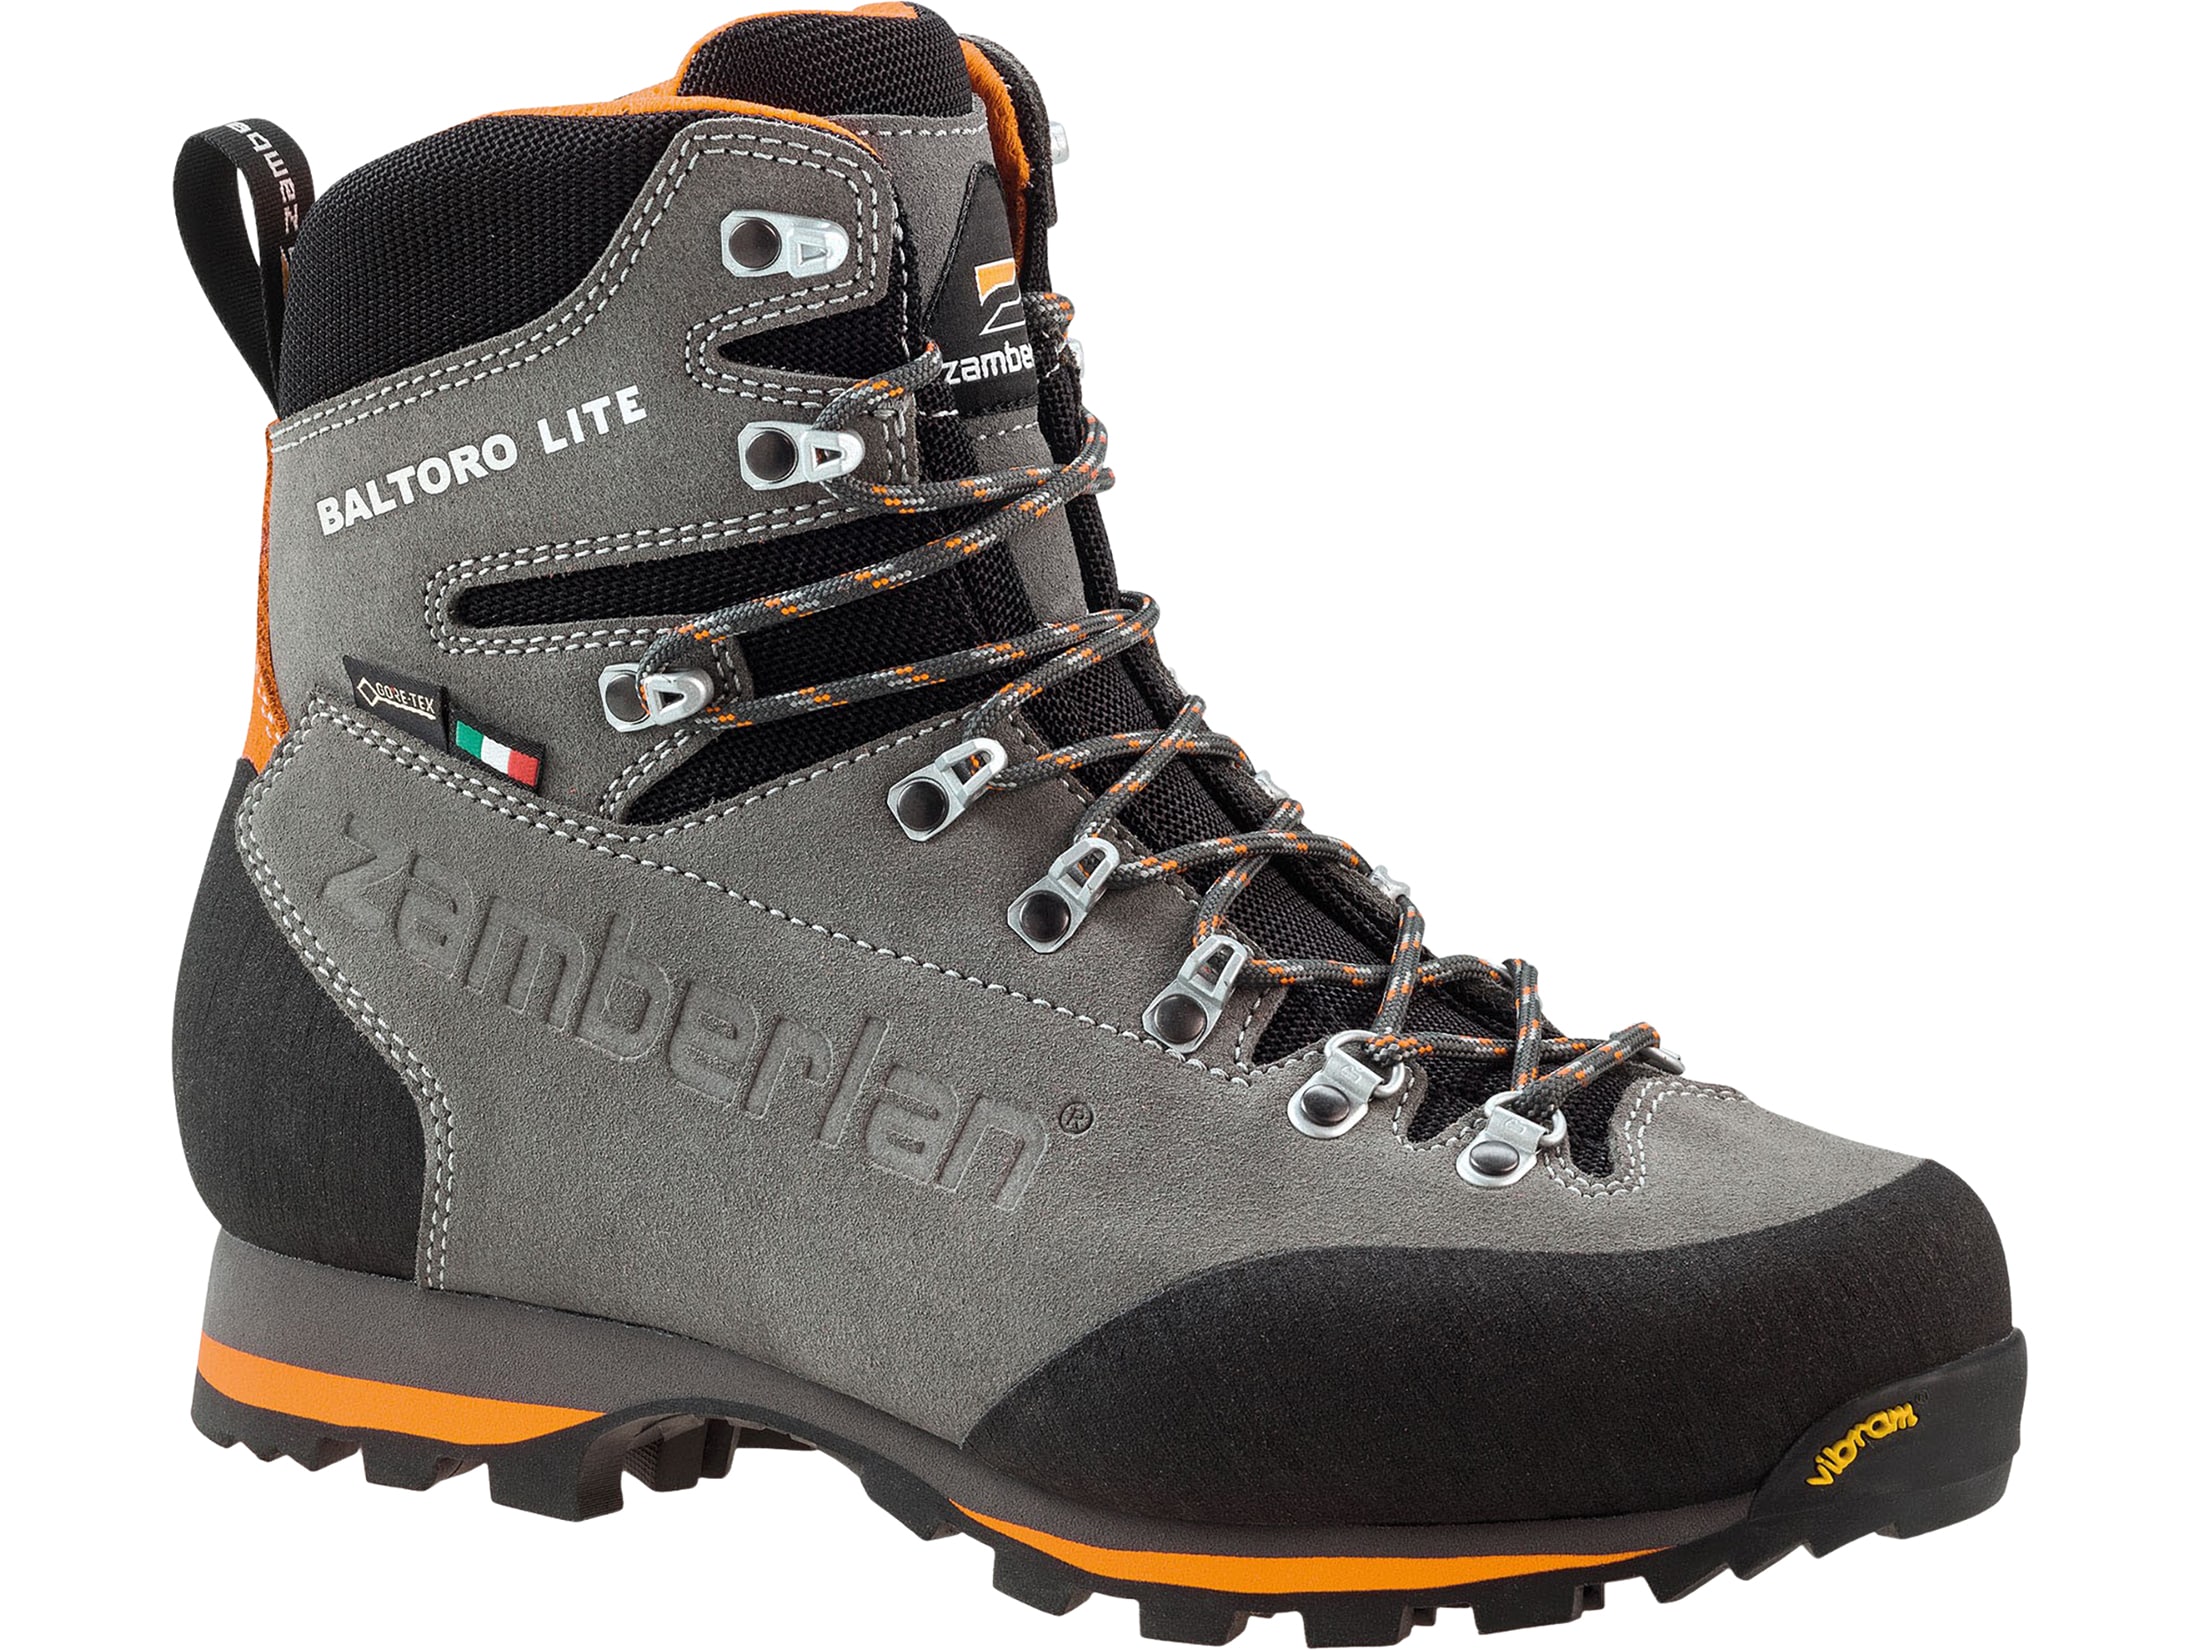 Zamberlan 1110 Baltoro Lite GTX Hiking Boots Leather Graphite/Black